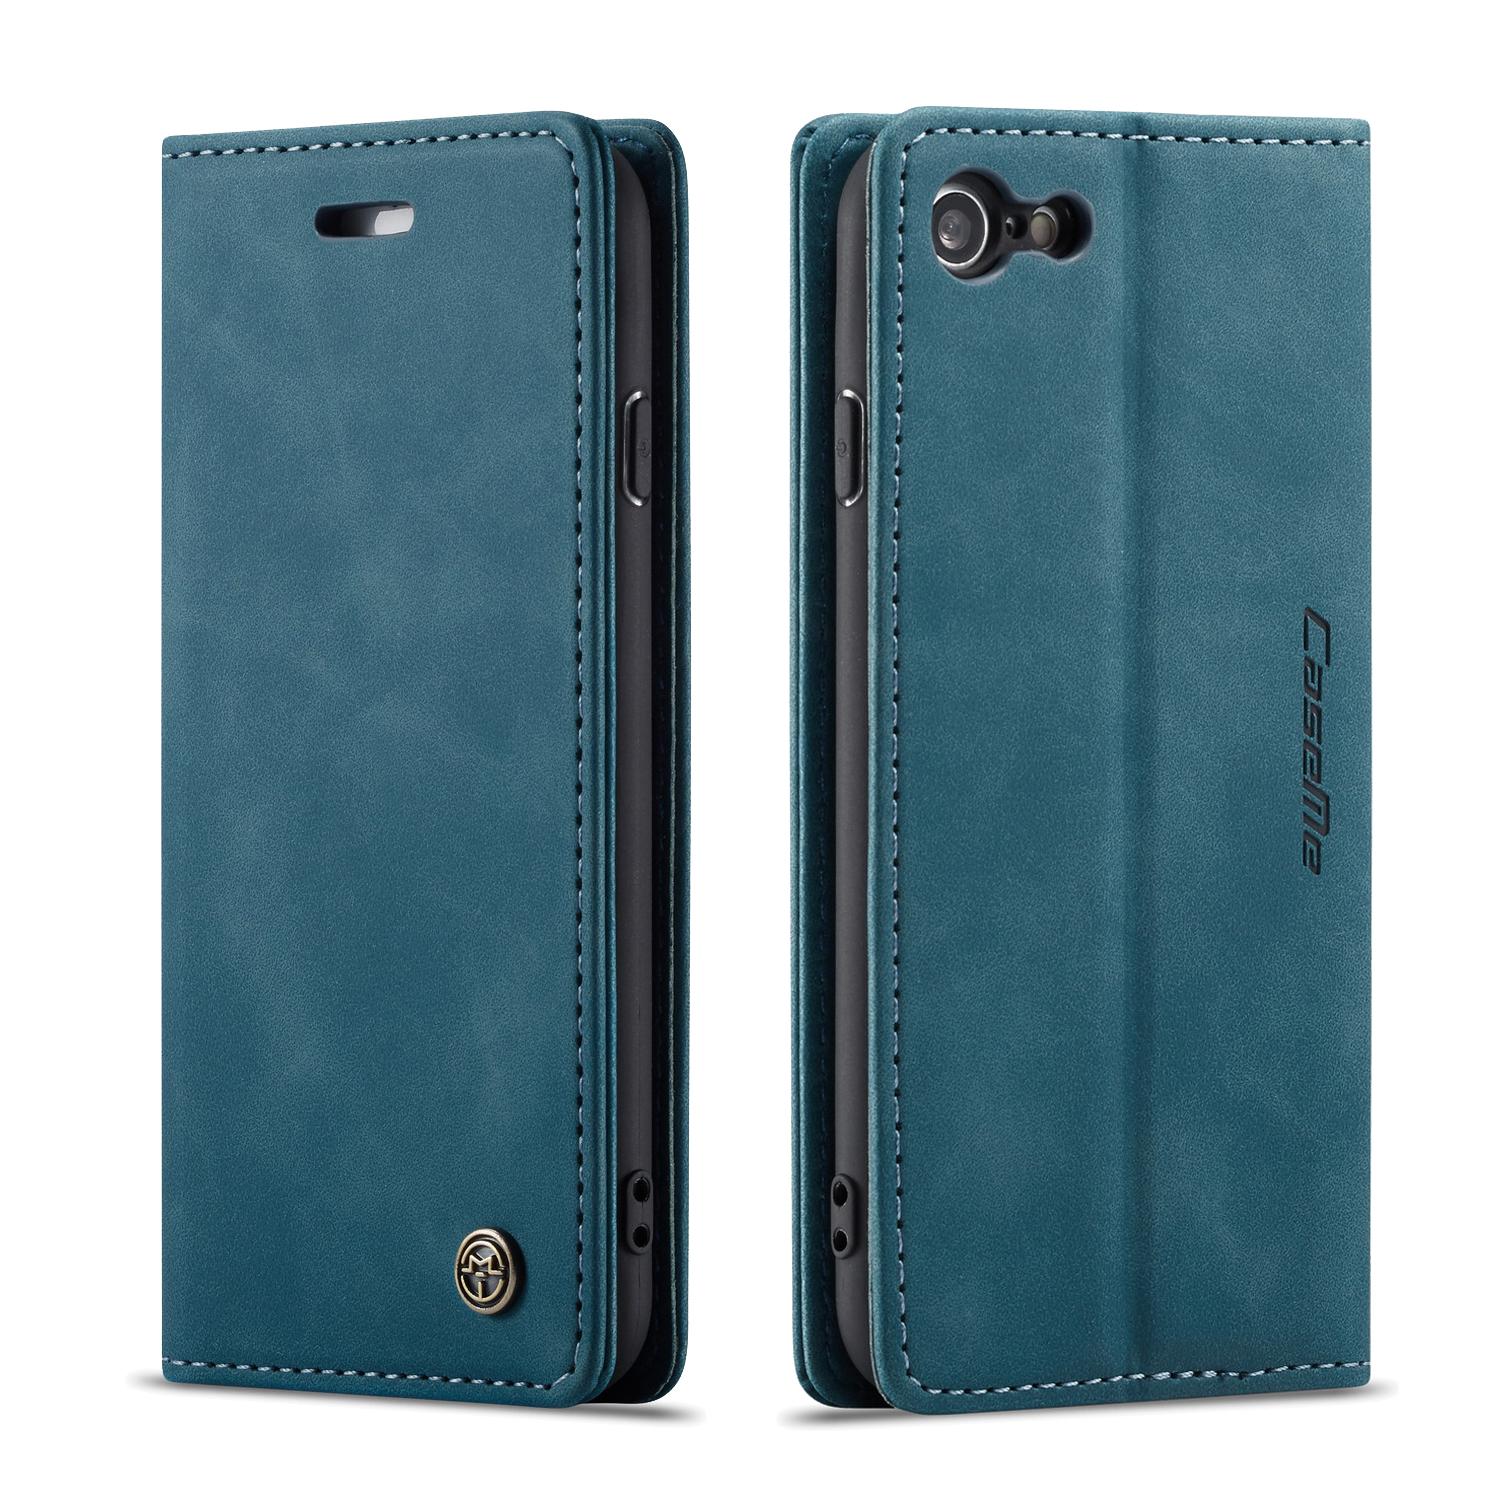 Custodie a portafoglio sottili iPhone 8 blu